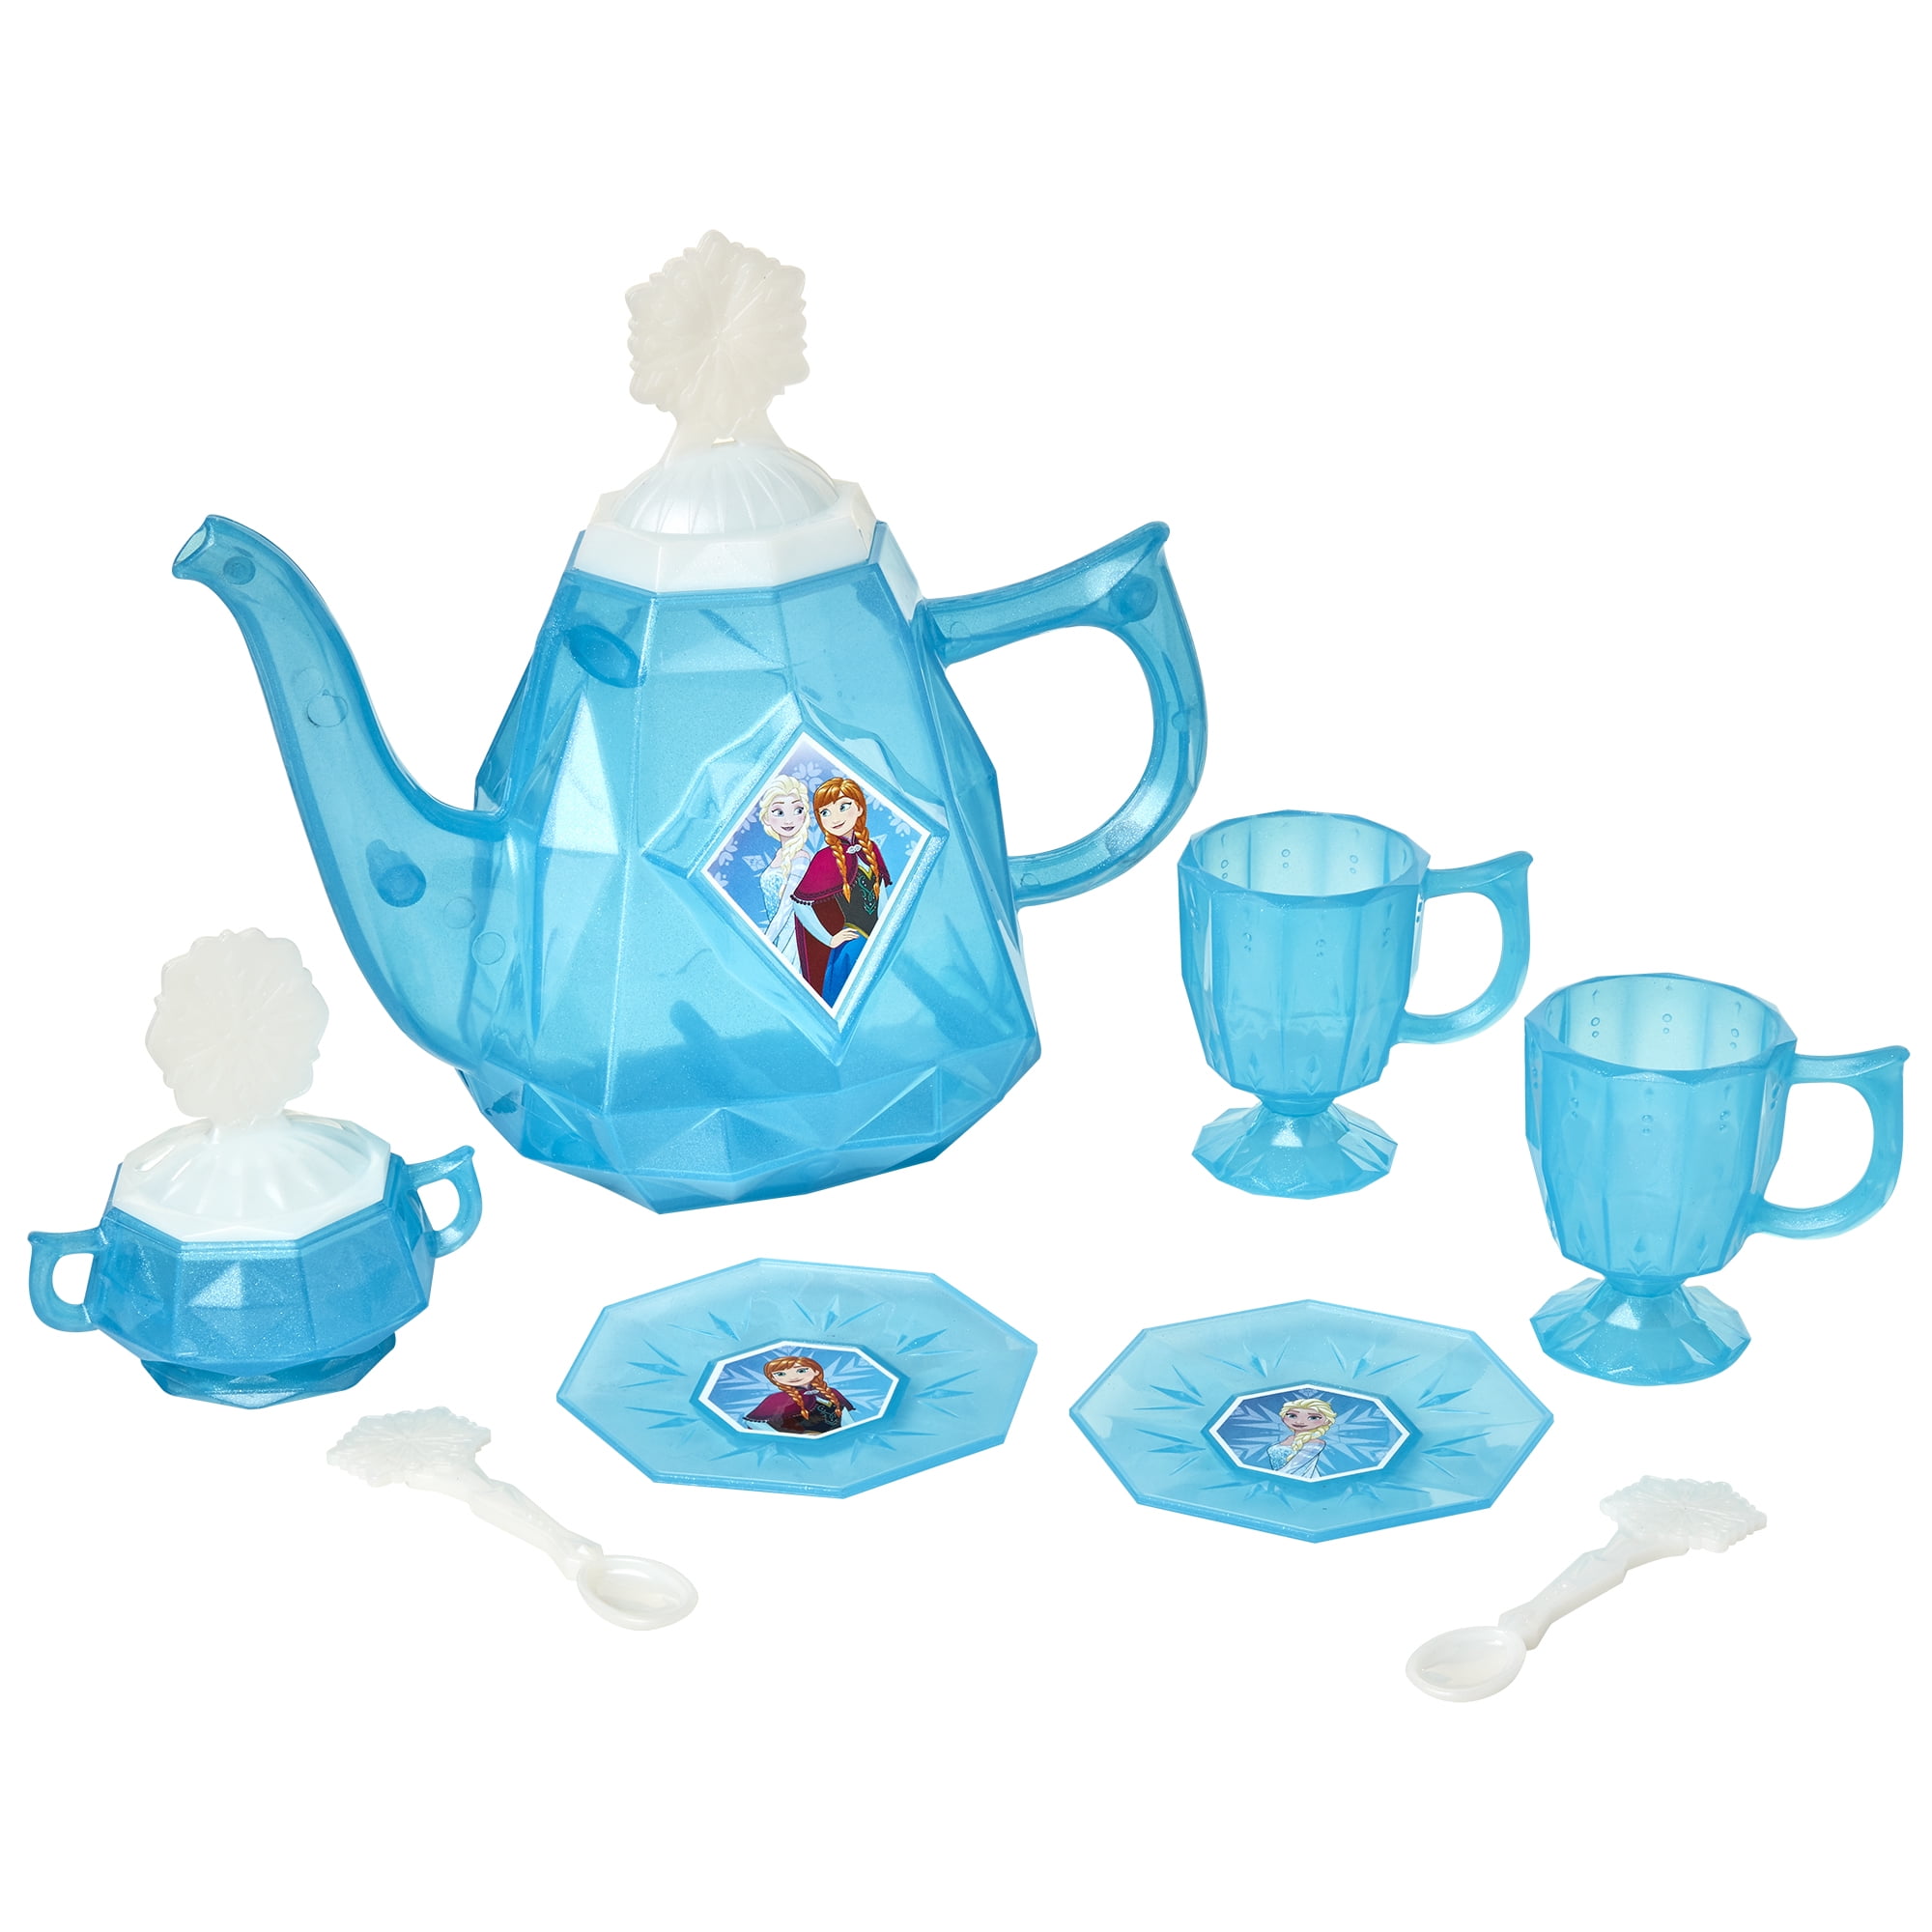 13 Pcs Teddy Bear for sale online Hunson Mini Porcelain Tea Set Party Play Ceramic 